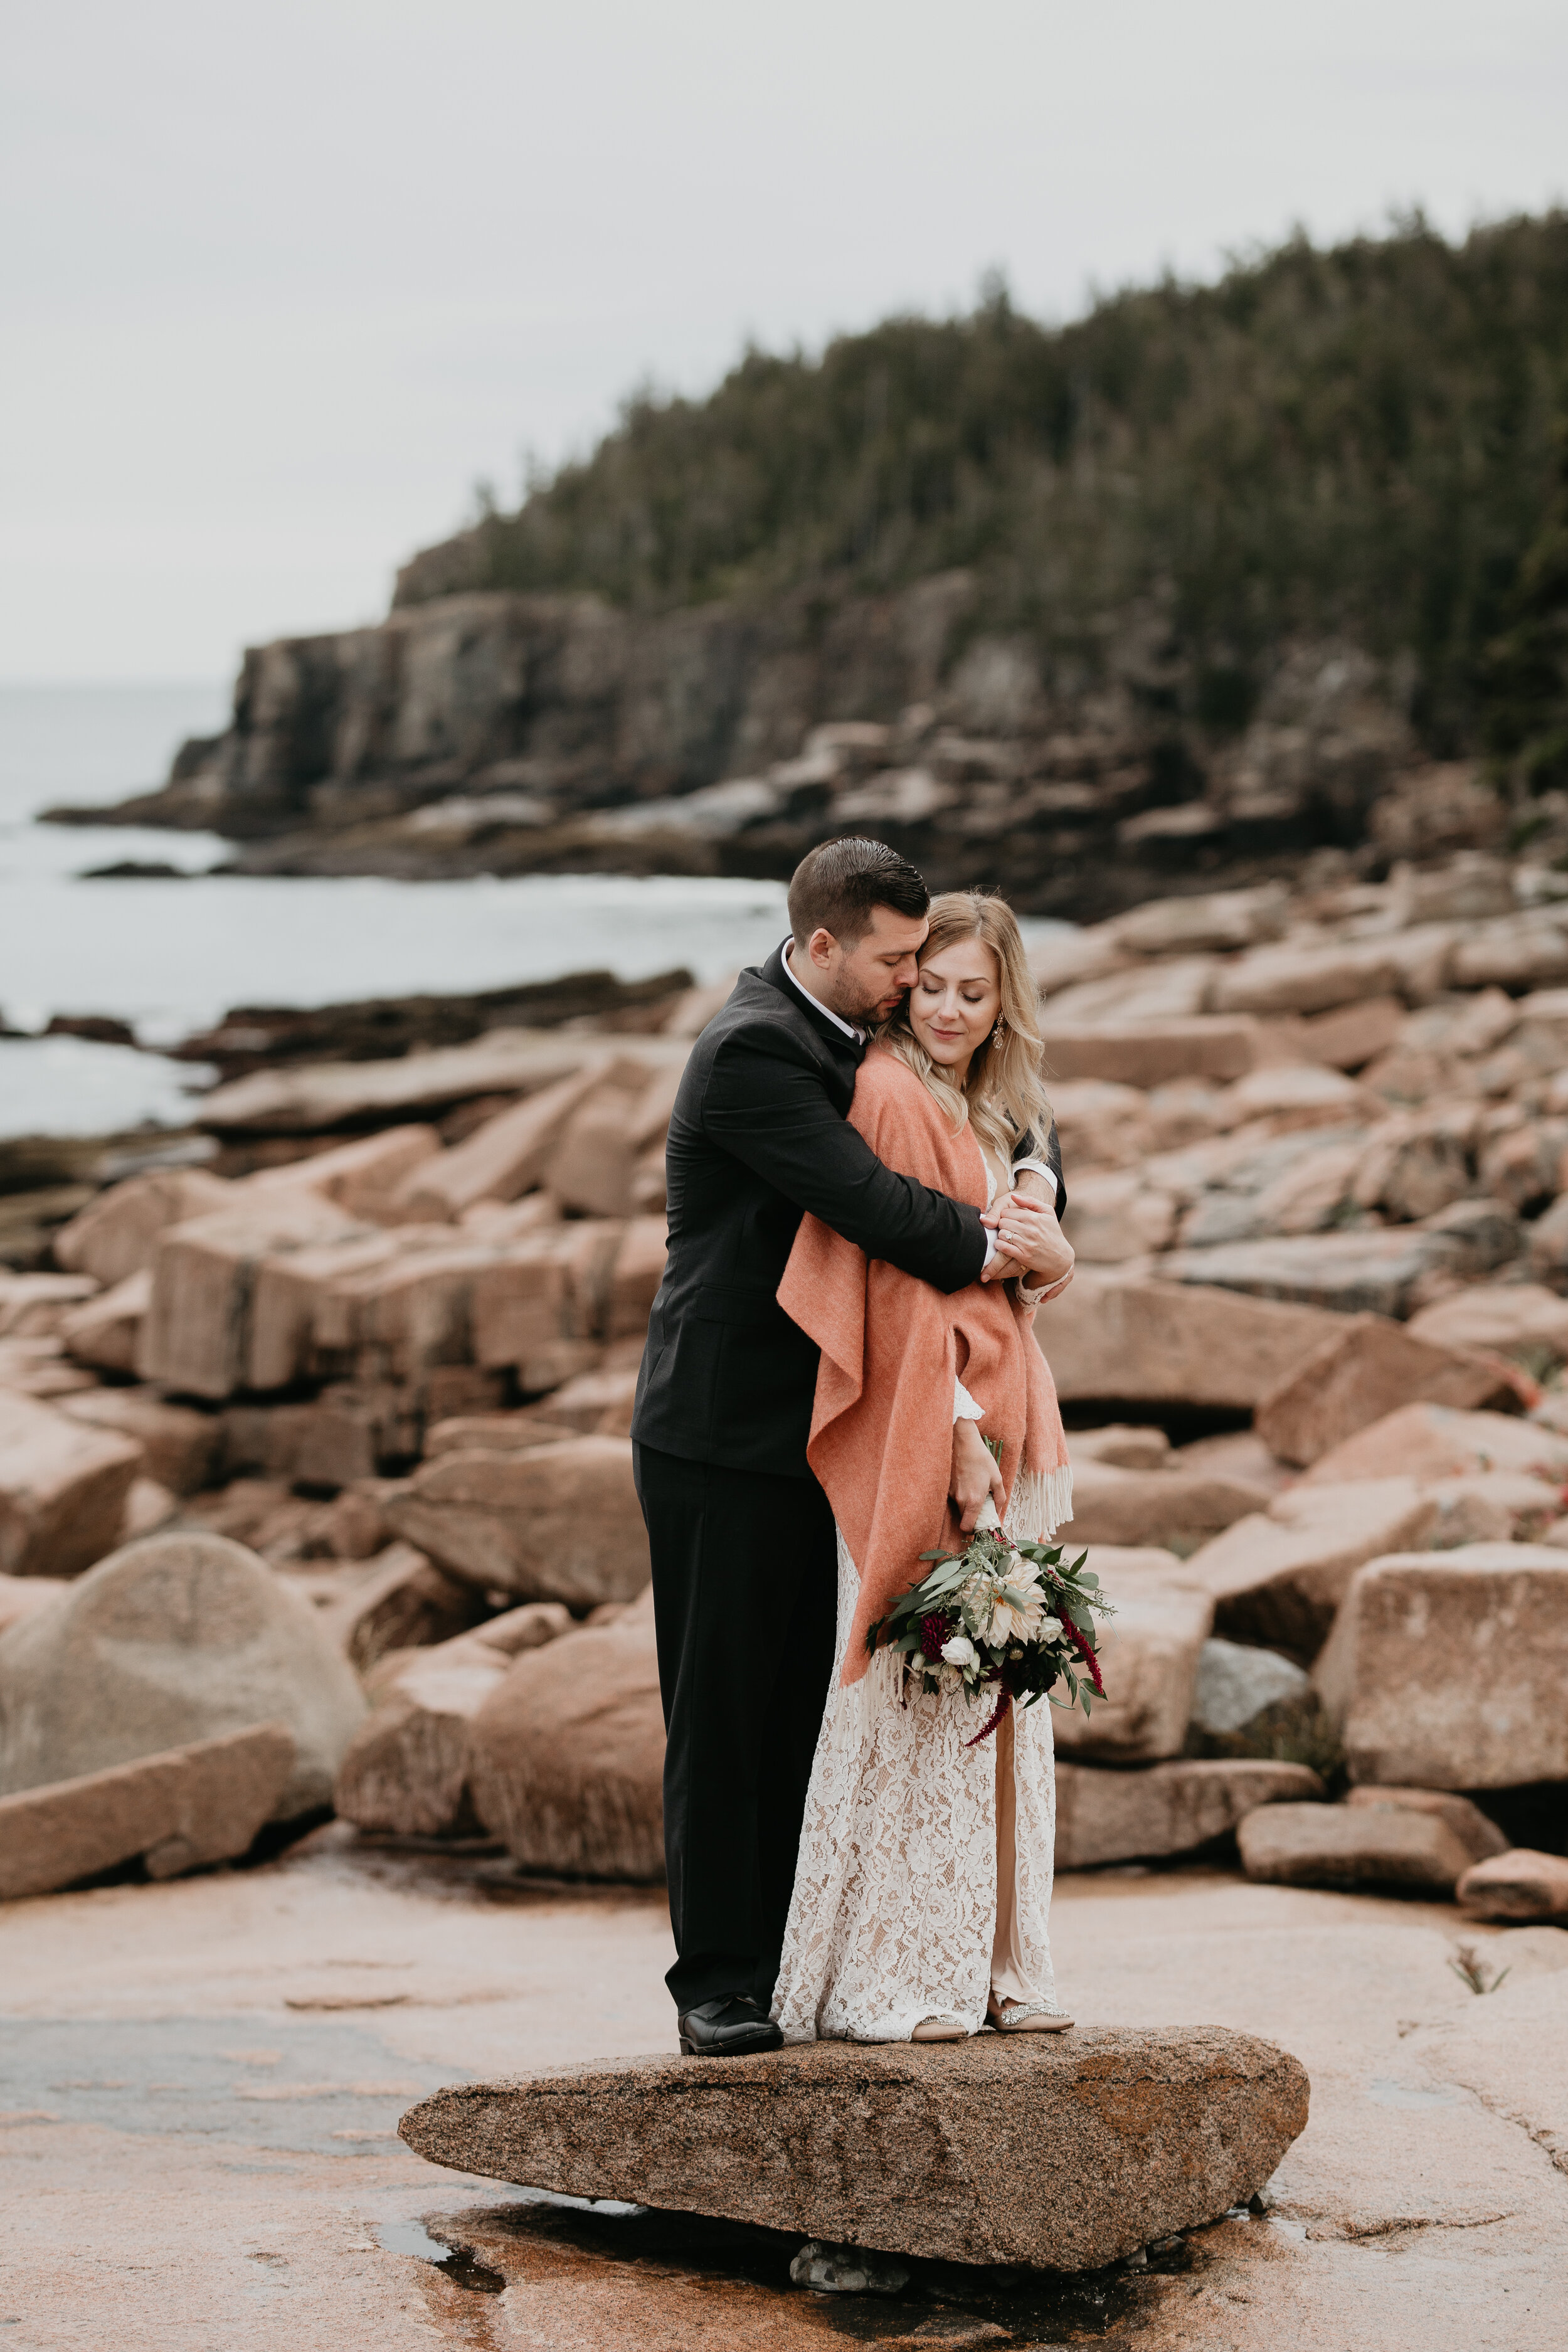 Nicole-Daacke-Photography-Acadia-national-park-elopement-photography-elopement-in-acadia-inspiration-maine-intimate-wedding-destination-elopement-photographer-rainy-day-maine-coast-bar-harbor-elopement-photography-160.jpg